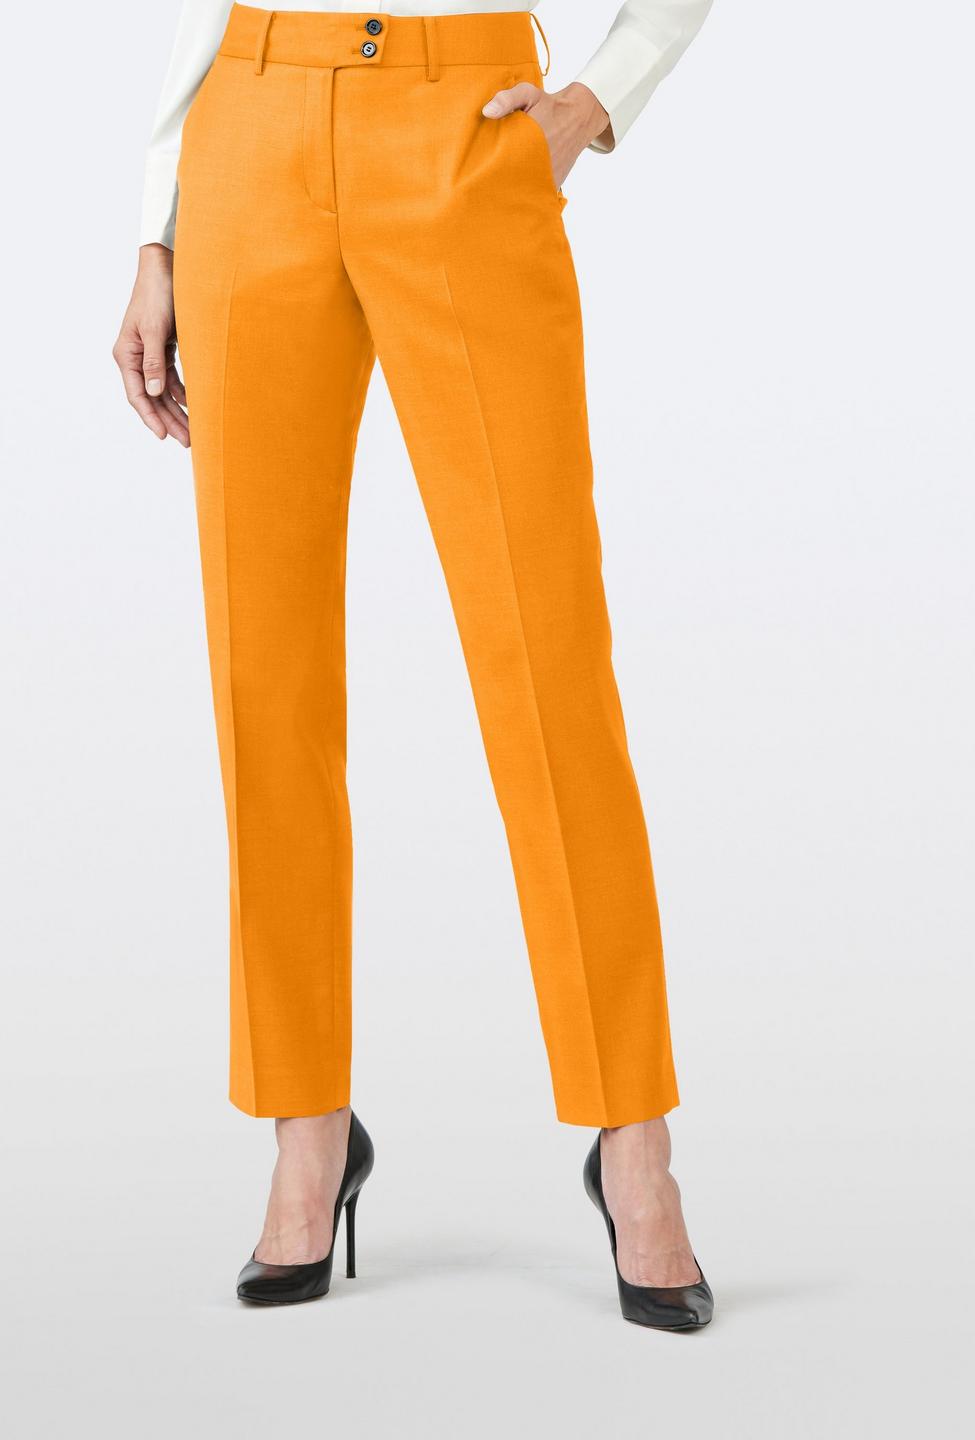 Harrogate Orange Pants